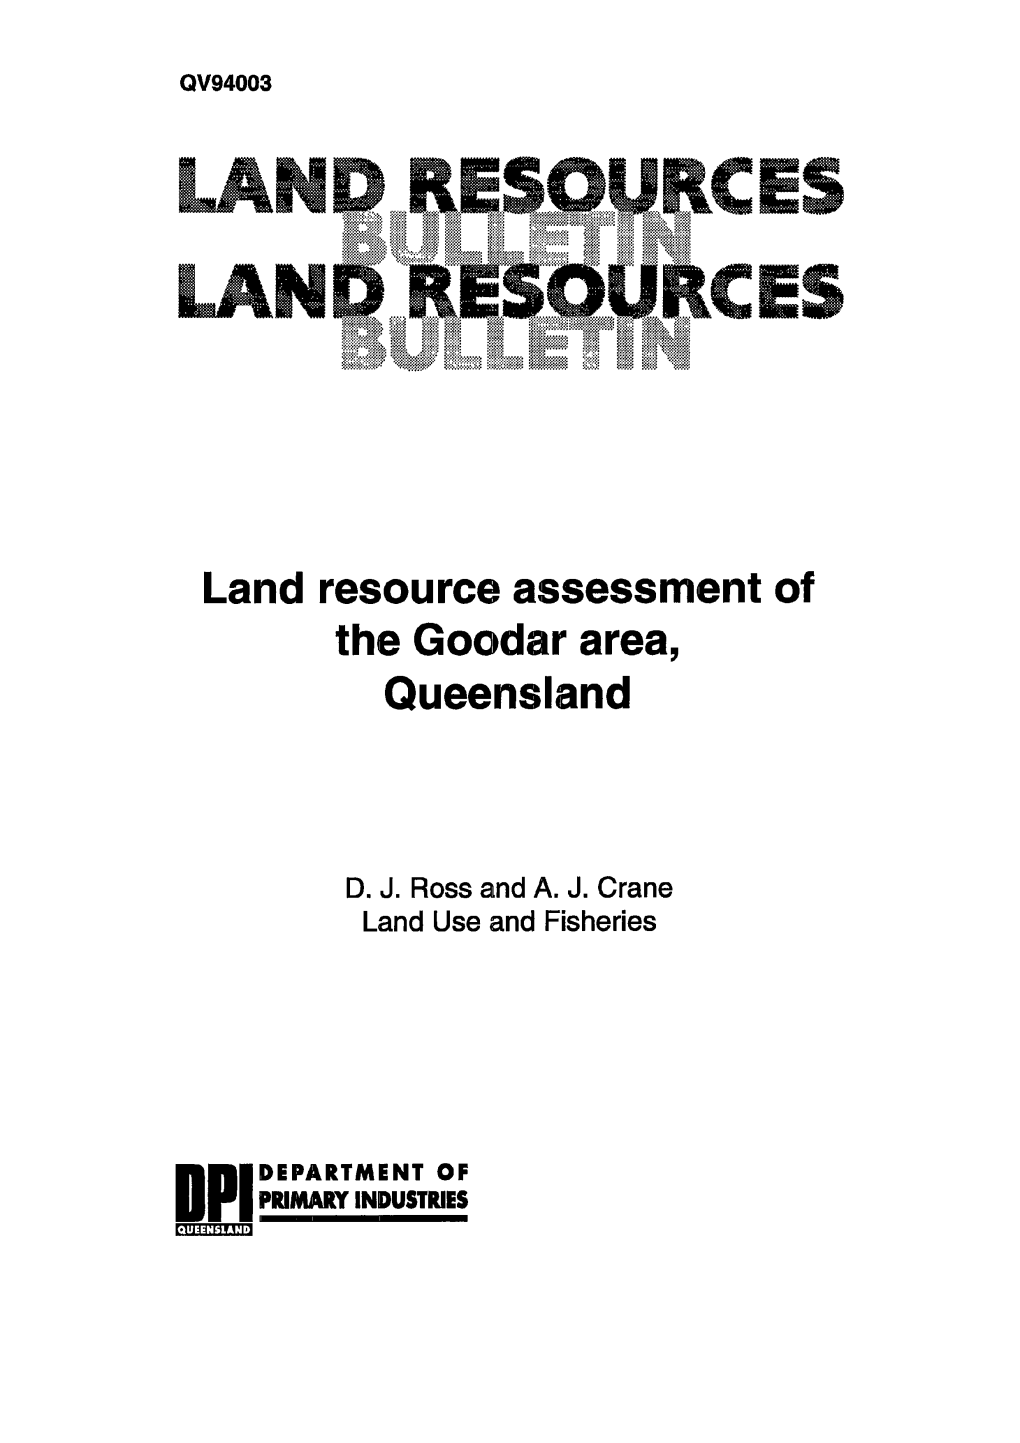 Land Resource Assessment of the Goodar Area, Queensland